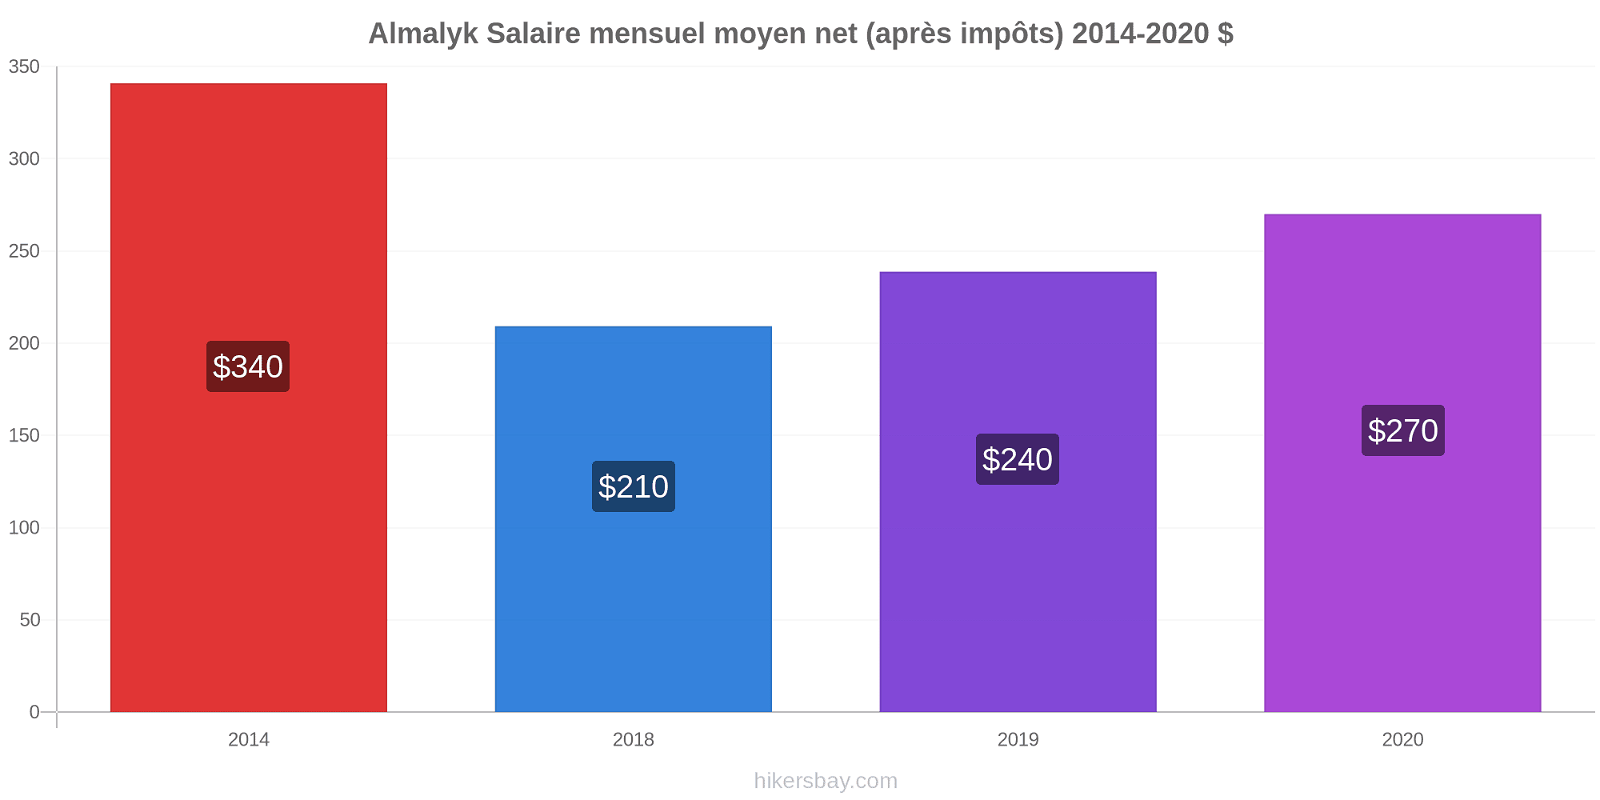 Almalyk changements de prix Salaire mensuel Net (après impôts) hikersbay.com